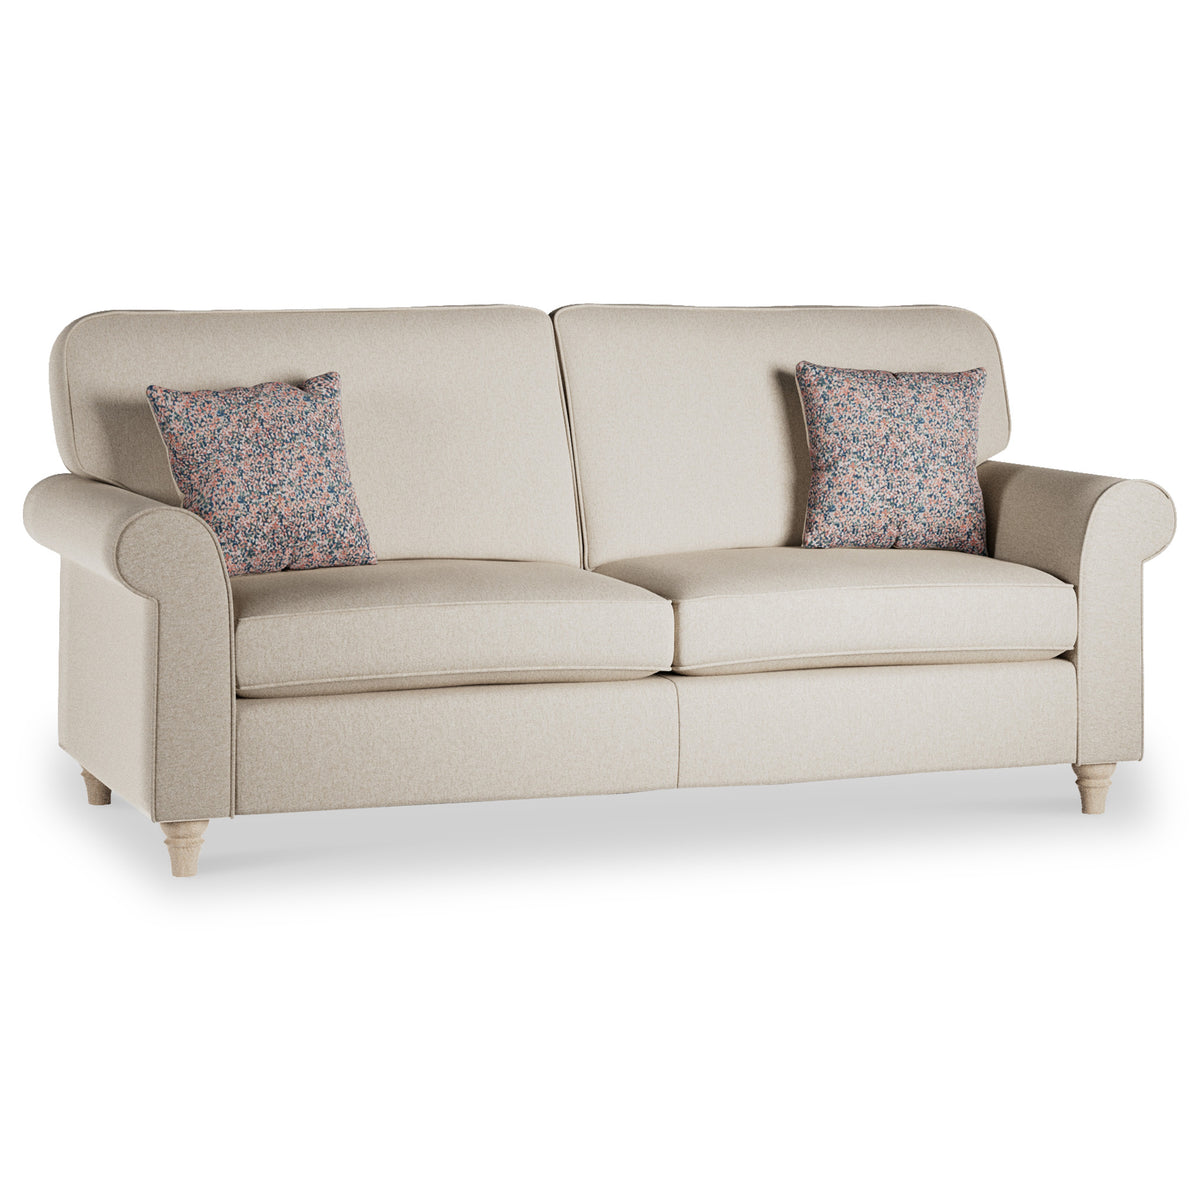 Thomas Sandstone 3 Seater Sofa from Roseland Furniture